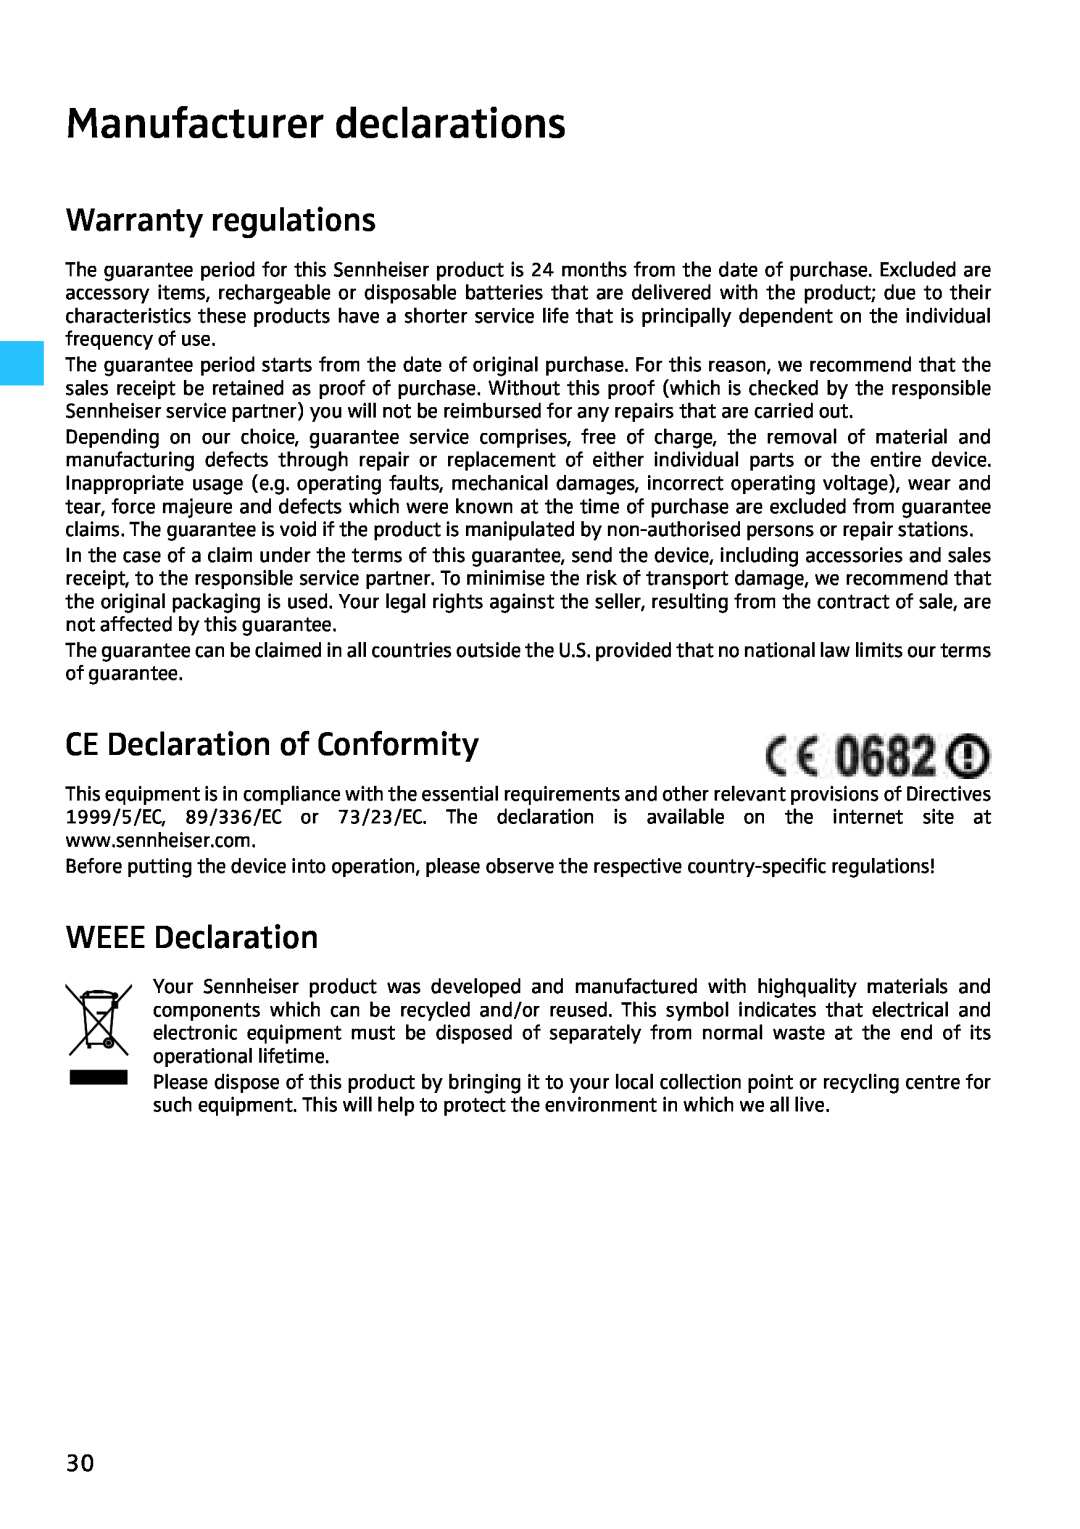 Sennheiser SR 3254 manual Manufacturer declarations, Warranty regulations, CE Declaration of Conformity, WEEE Declaration 